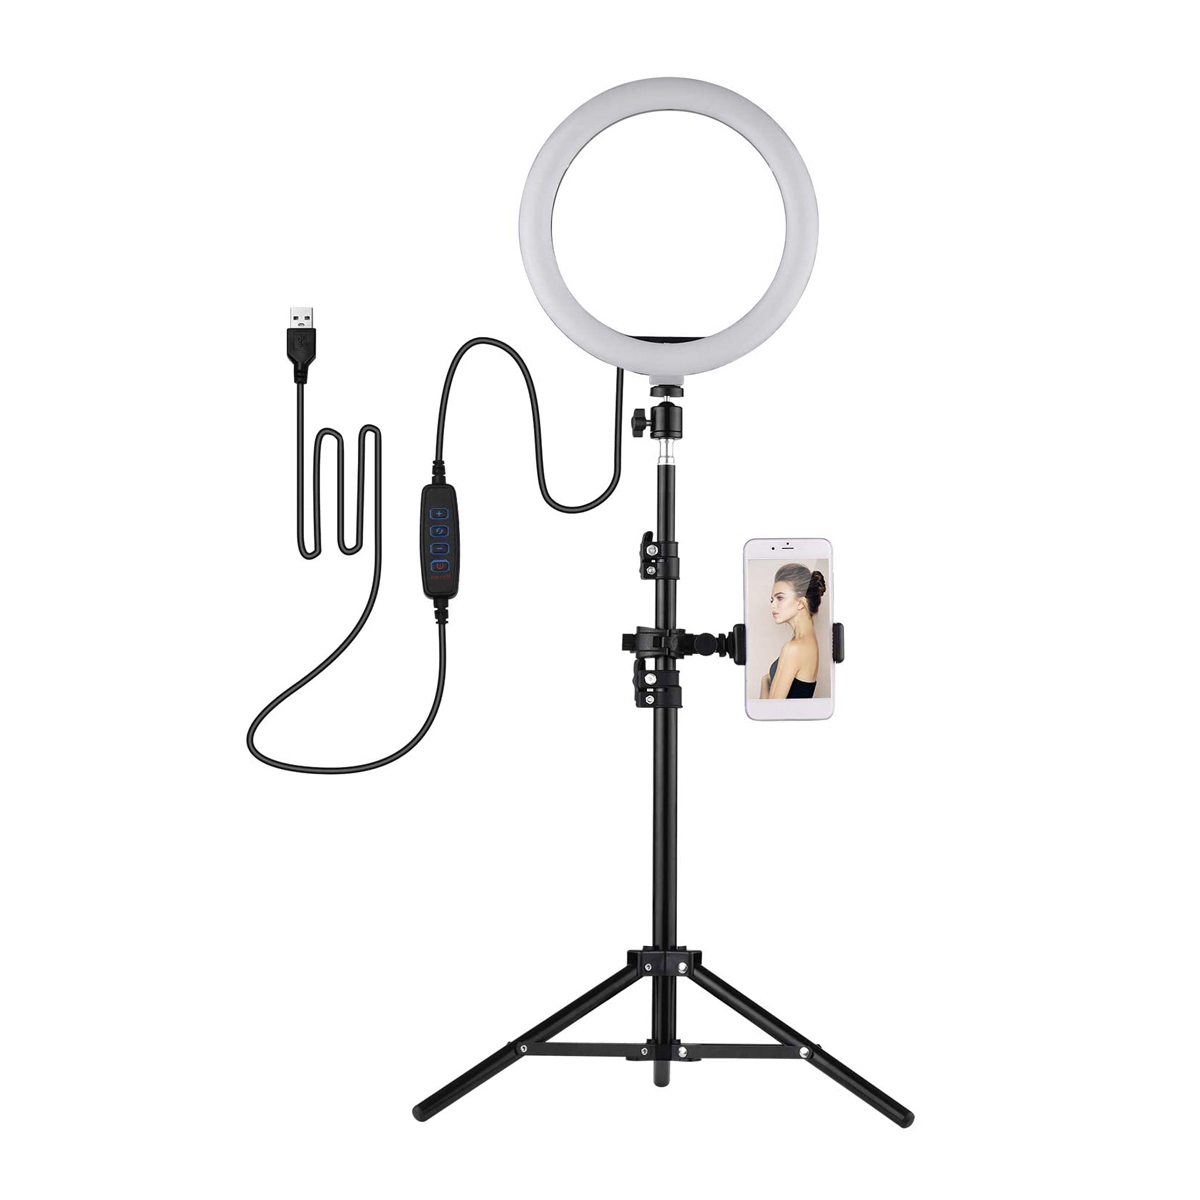 10-Inch-Selfie-Ring-Light-Kit-3-Lighting-Modes-USB-Powered-with-Phone-Holder-1727363-10